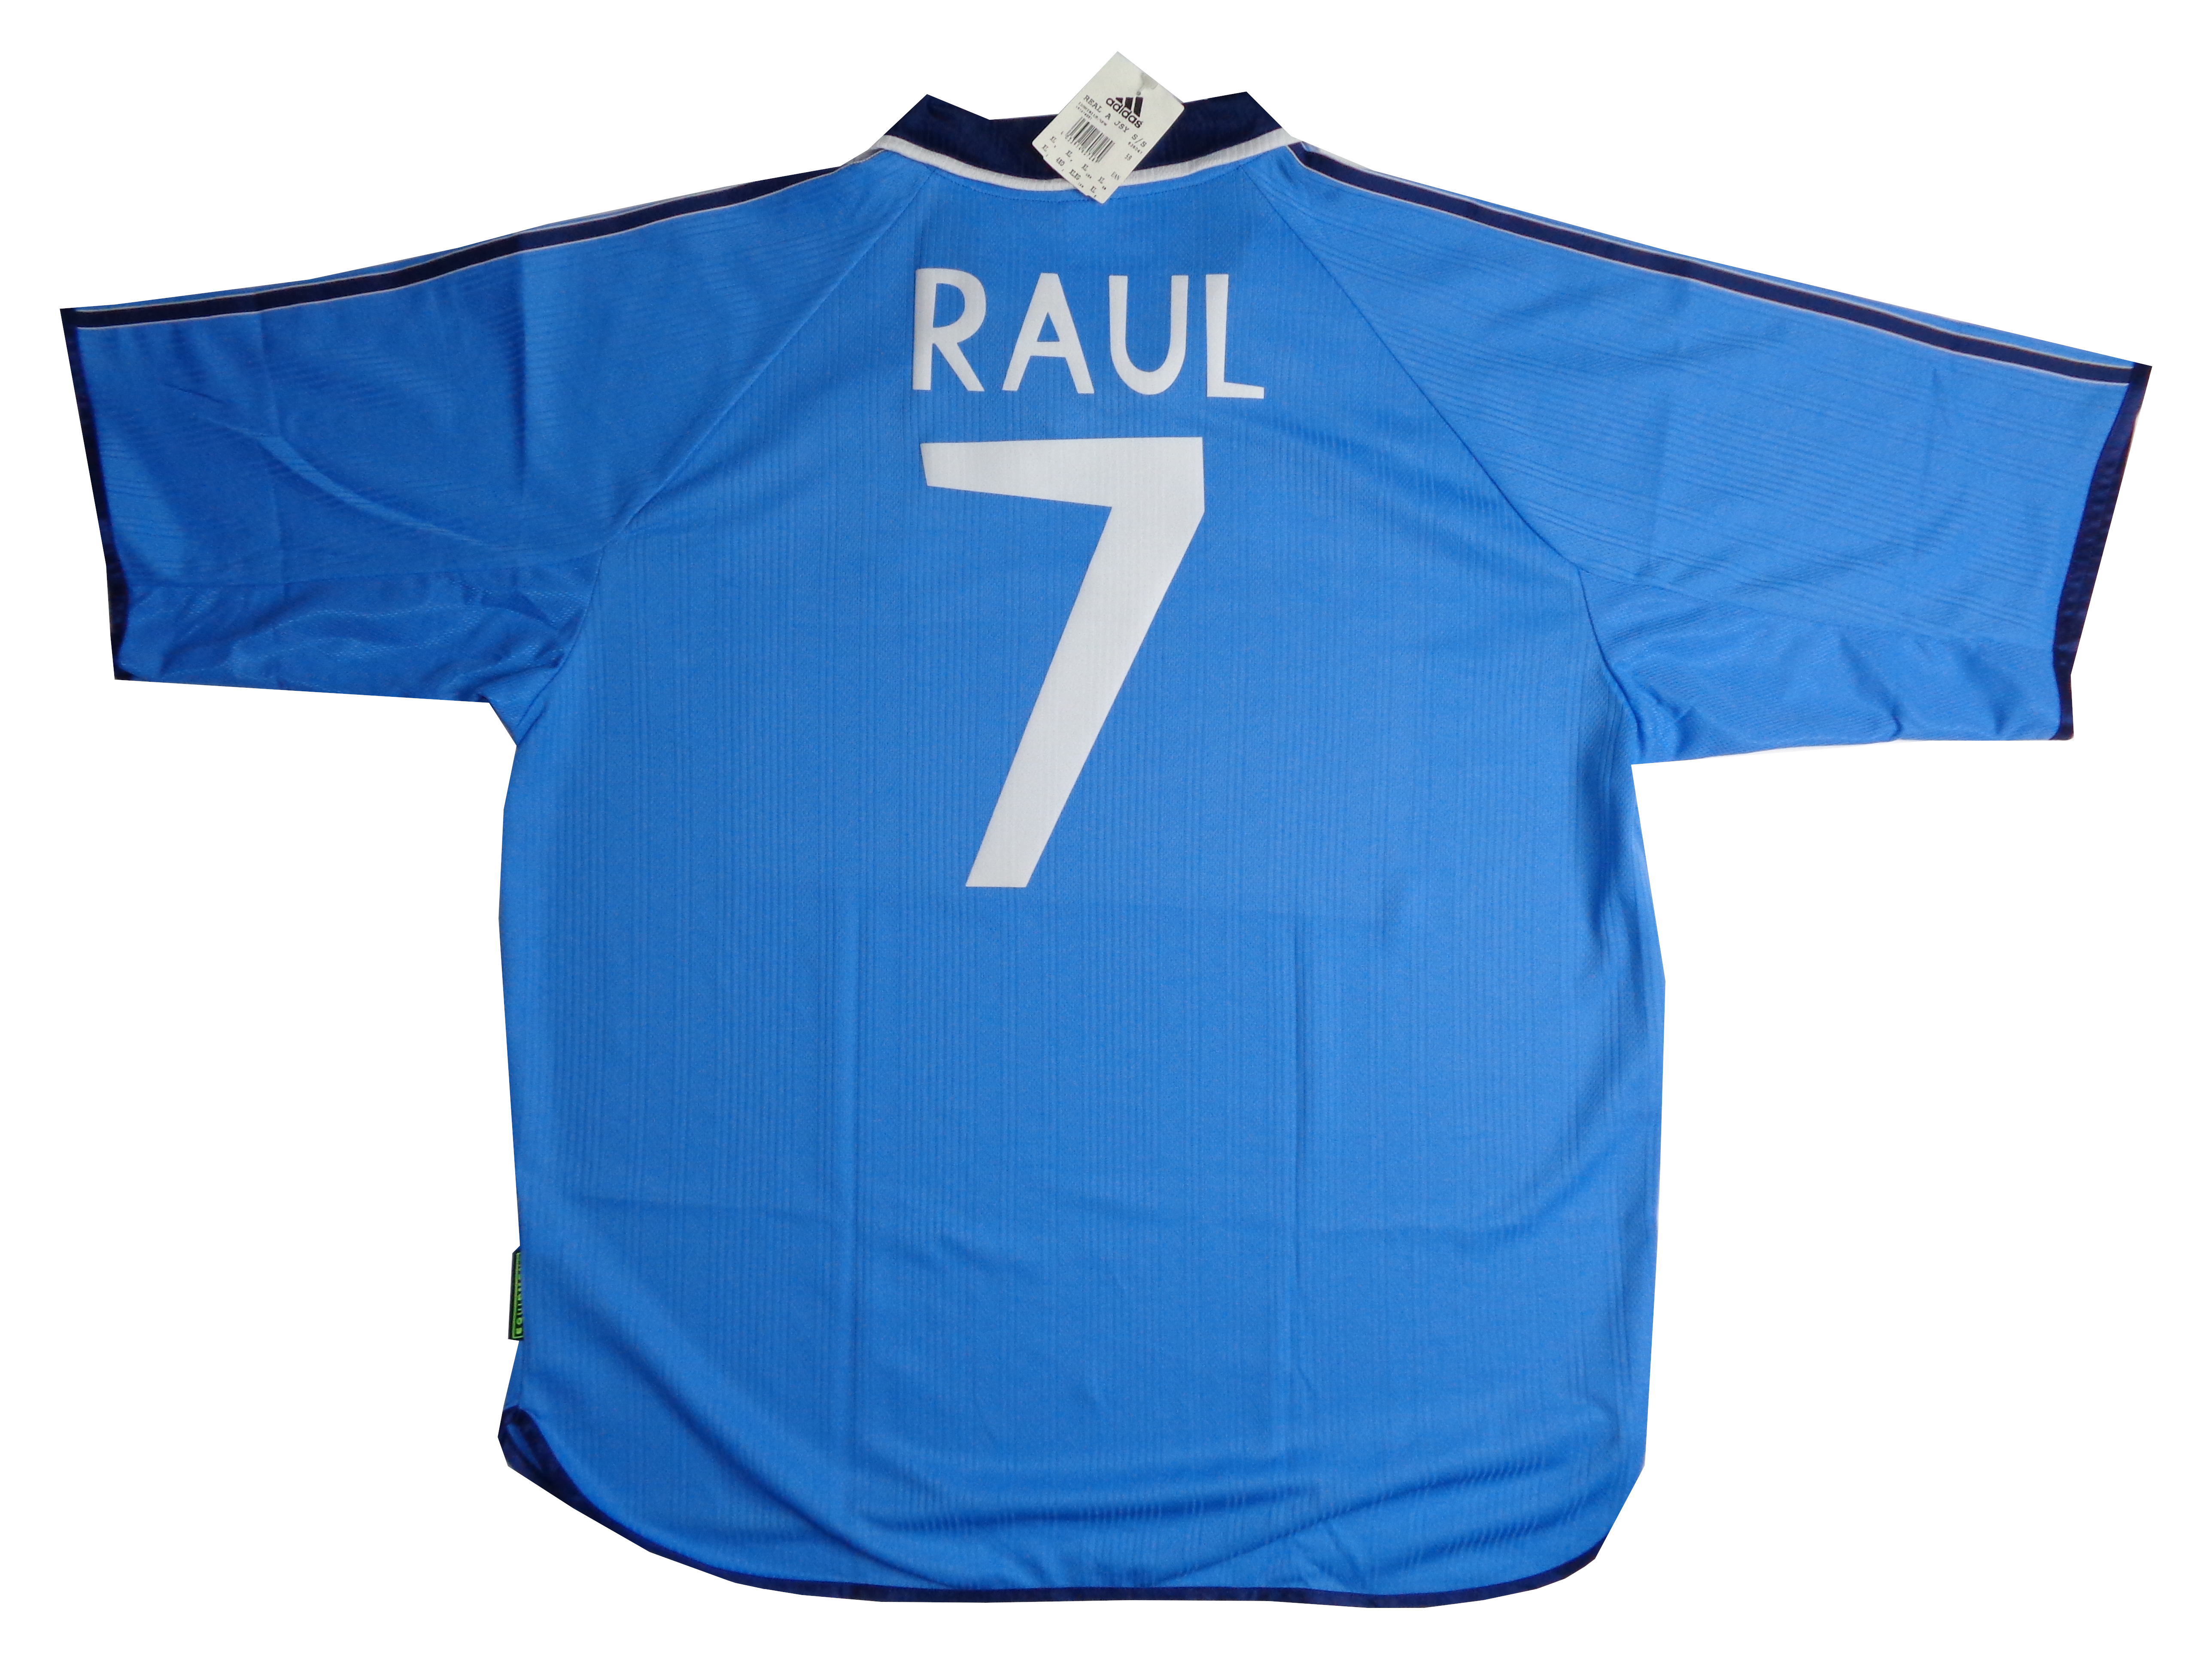 RAUL #7 - REAL MADRID 1998/00 PLAYER ISSUE THIRD SHIRT - ADIDAS - SIZE XL - BNWT